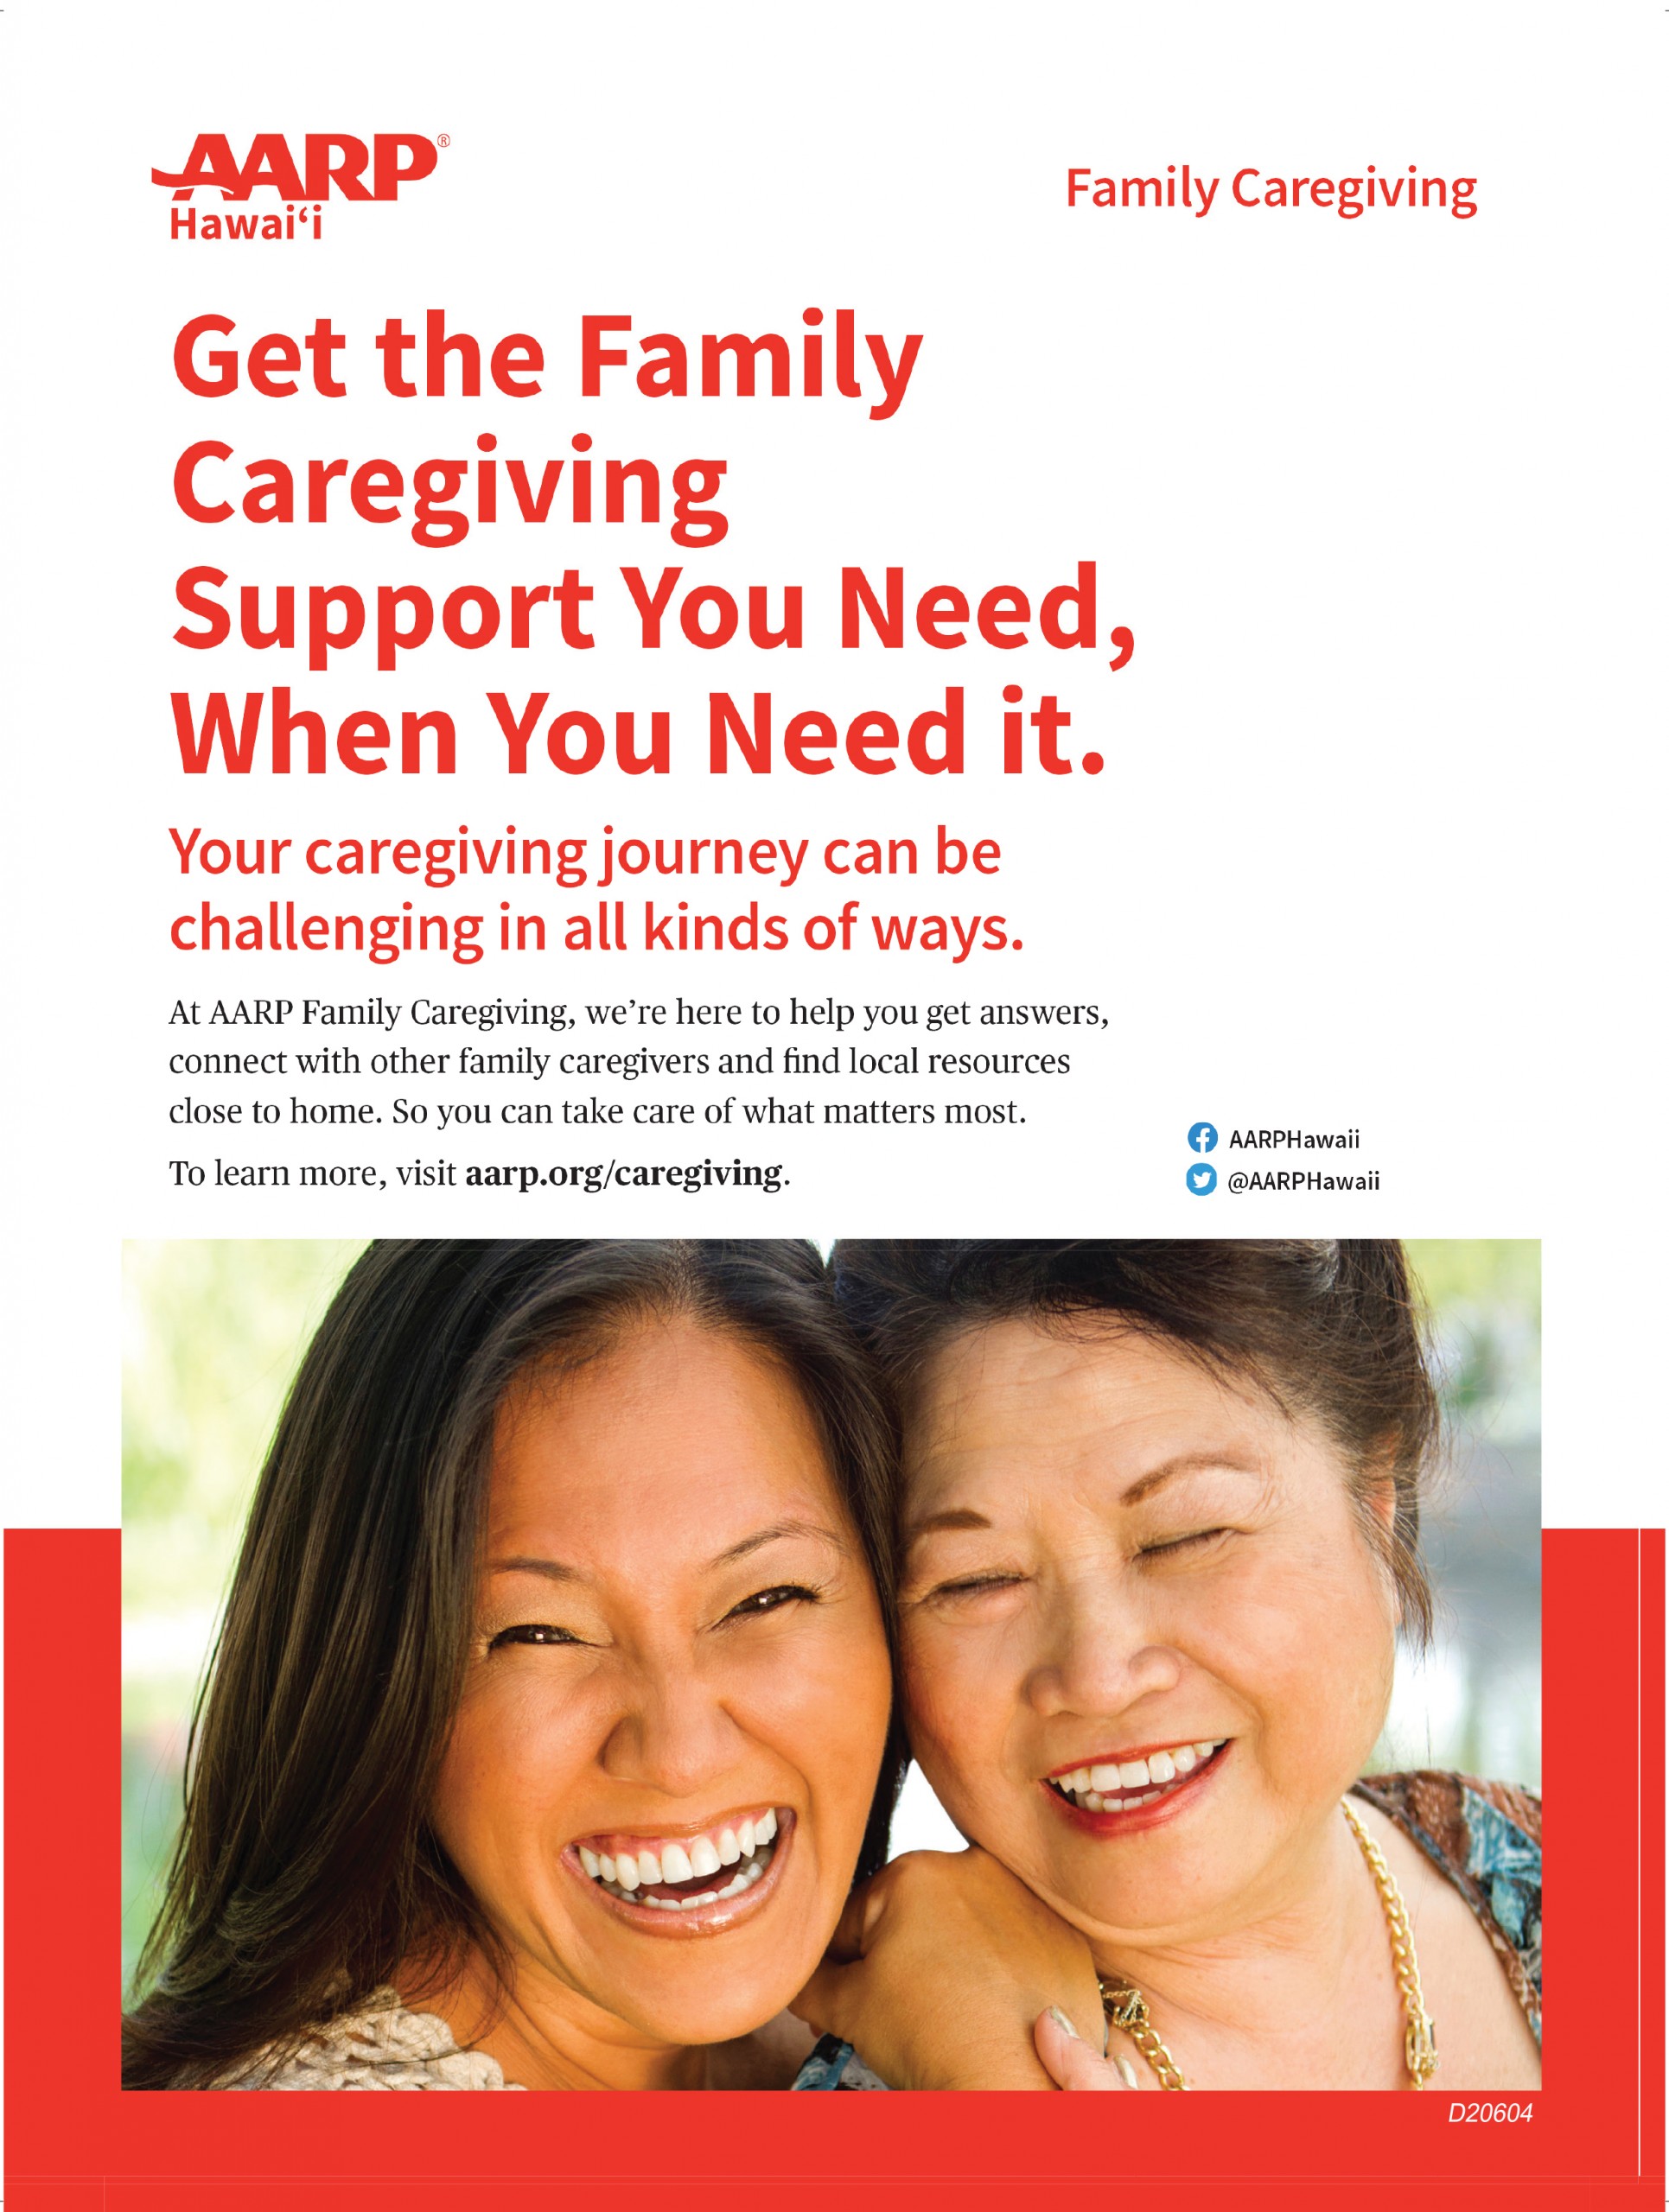 AARP Family Caregiving Resource Line